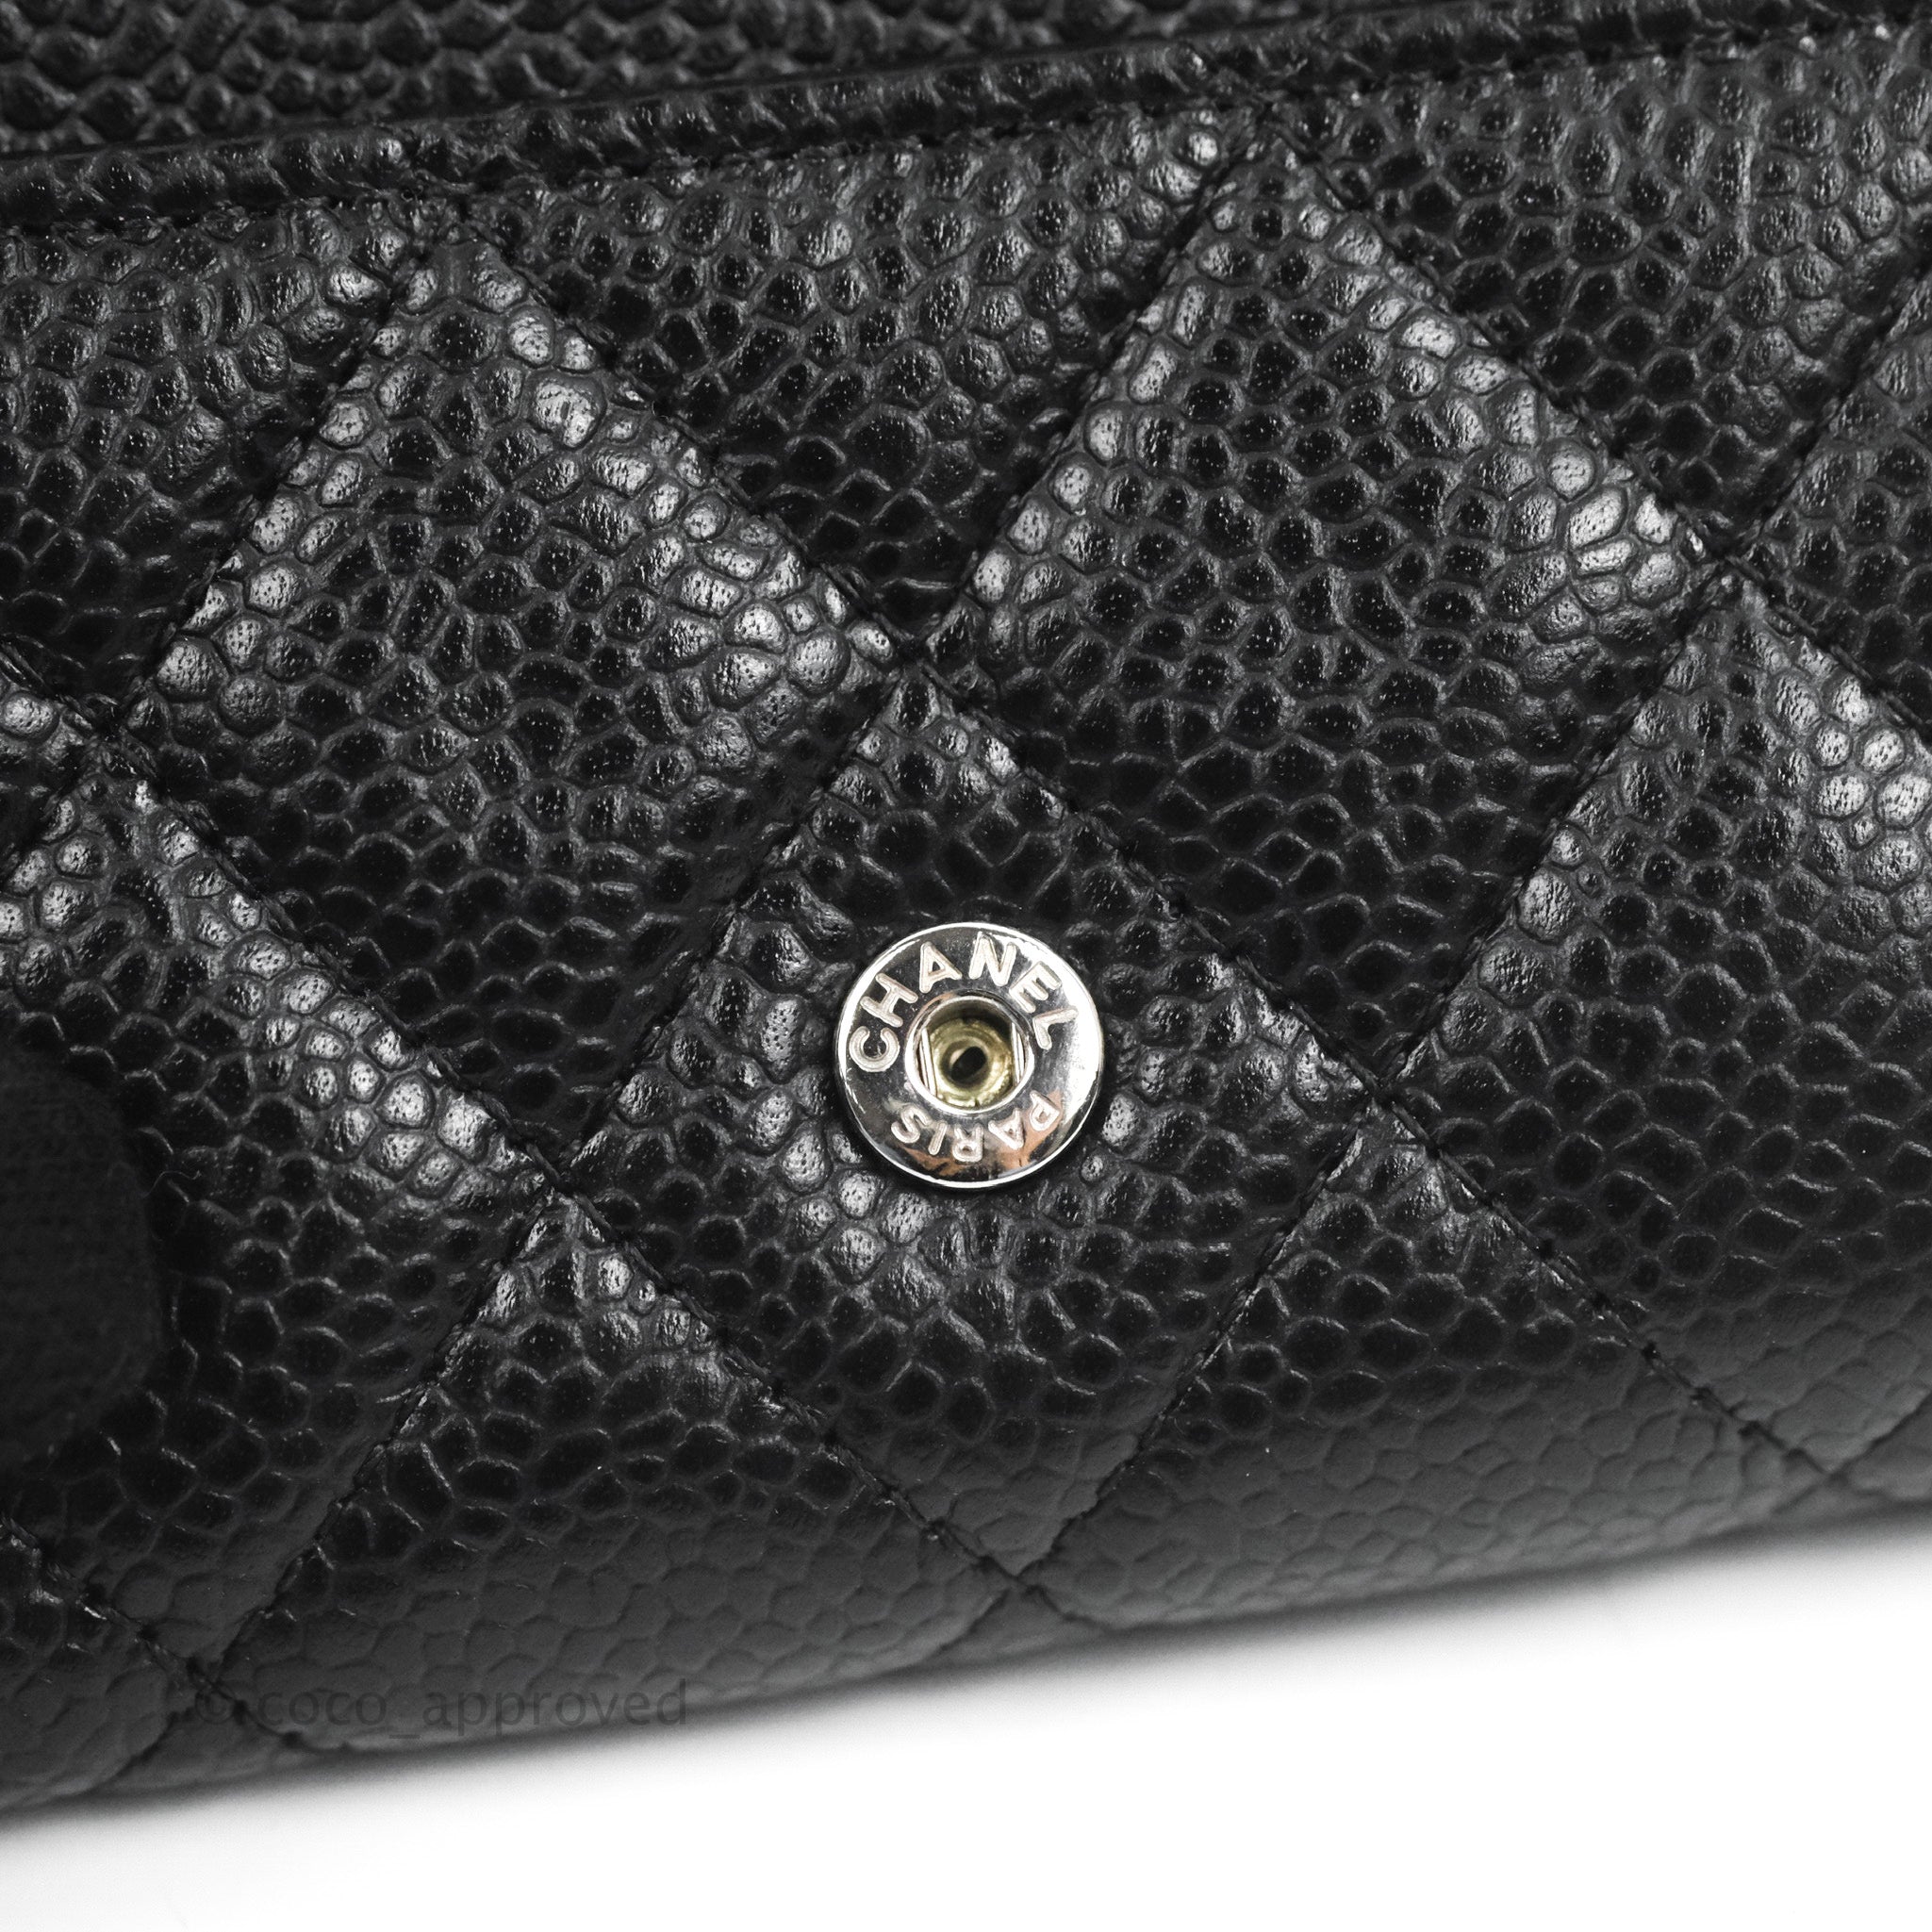 Authentic Chanel black caviar card holder brand new in box Silver hardware